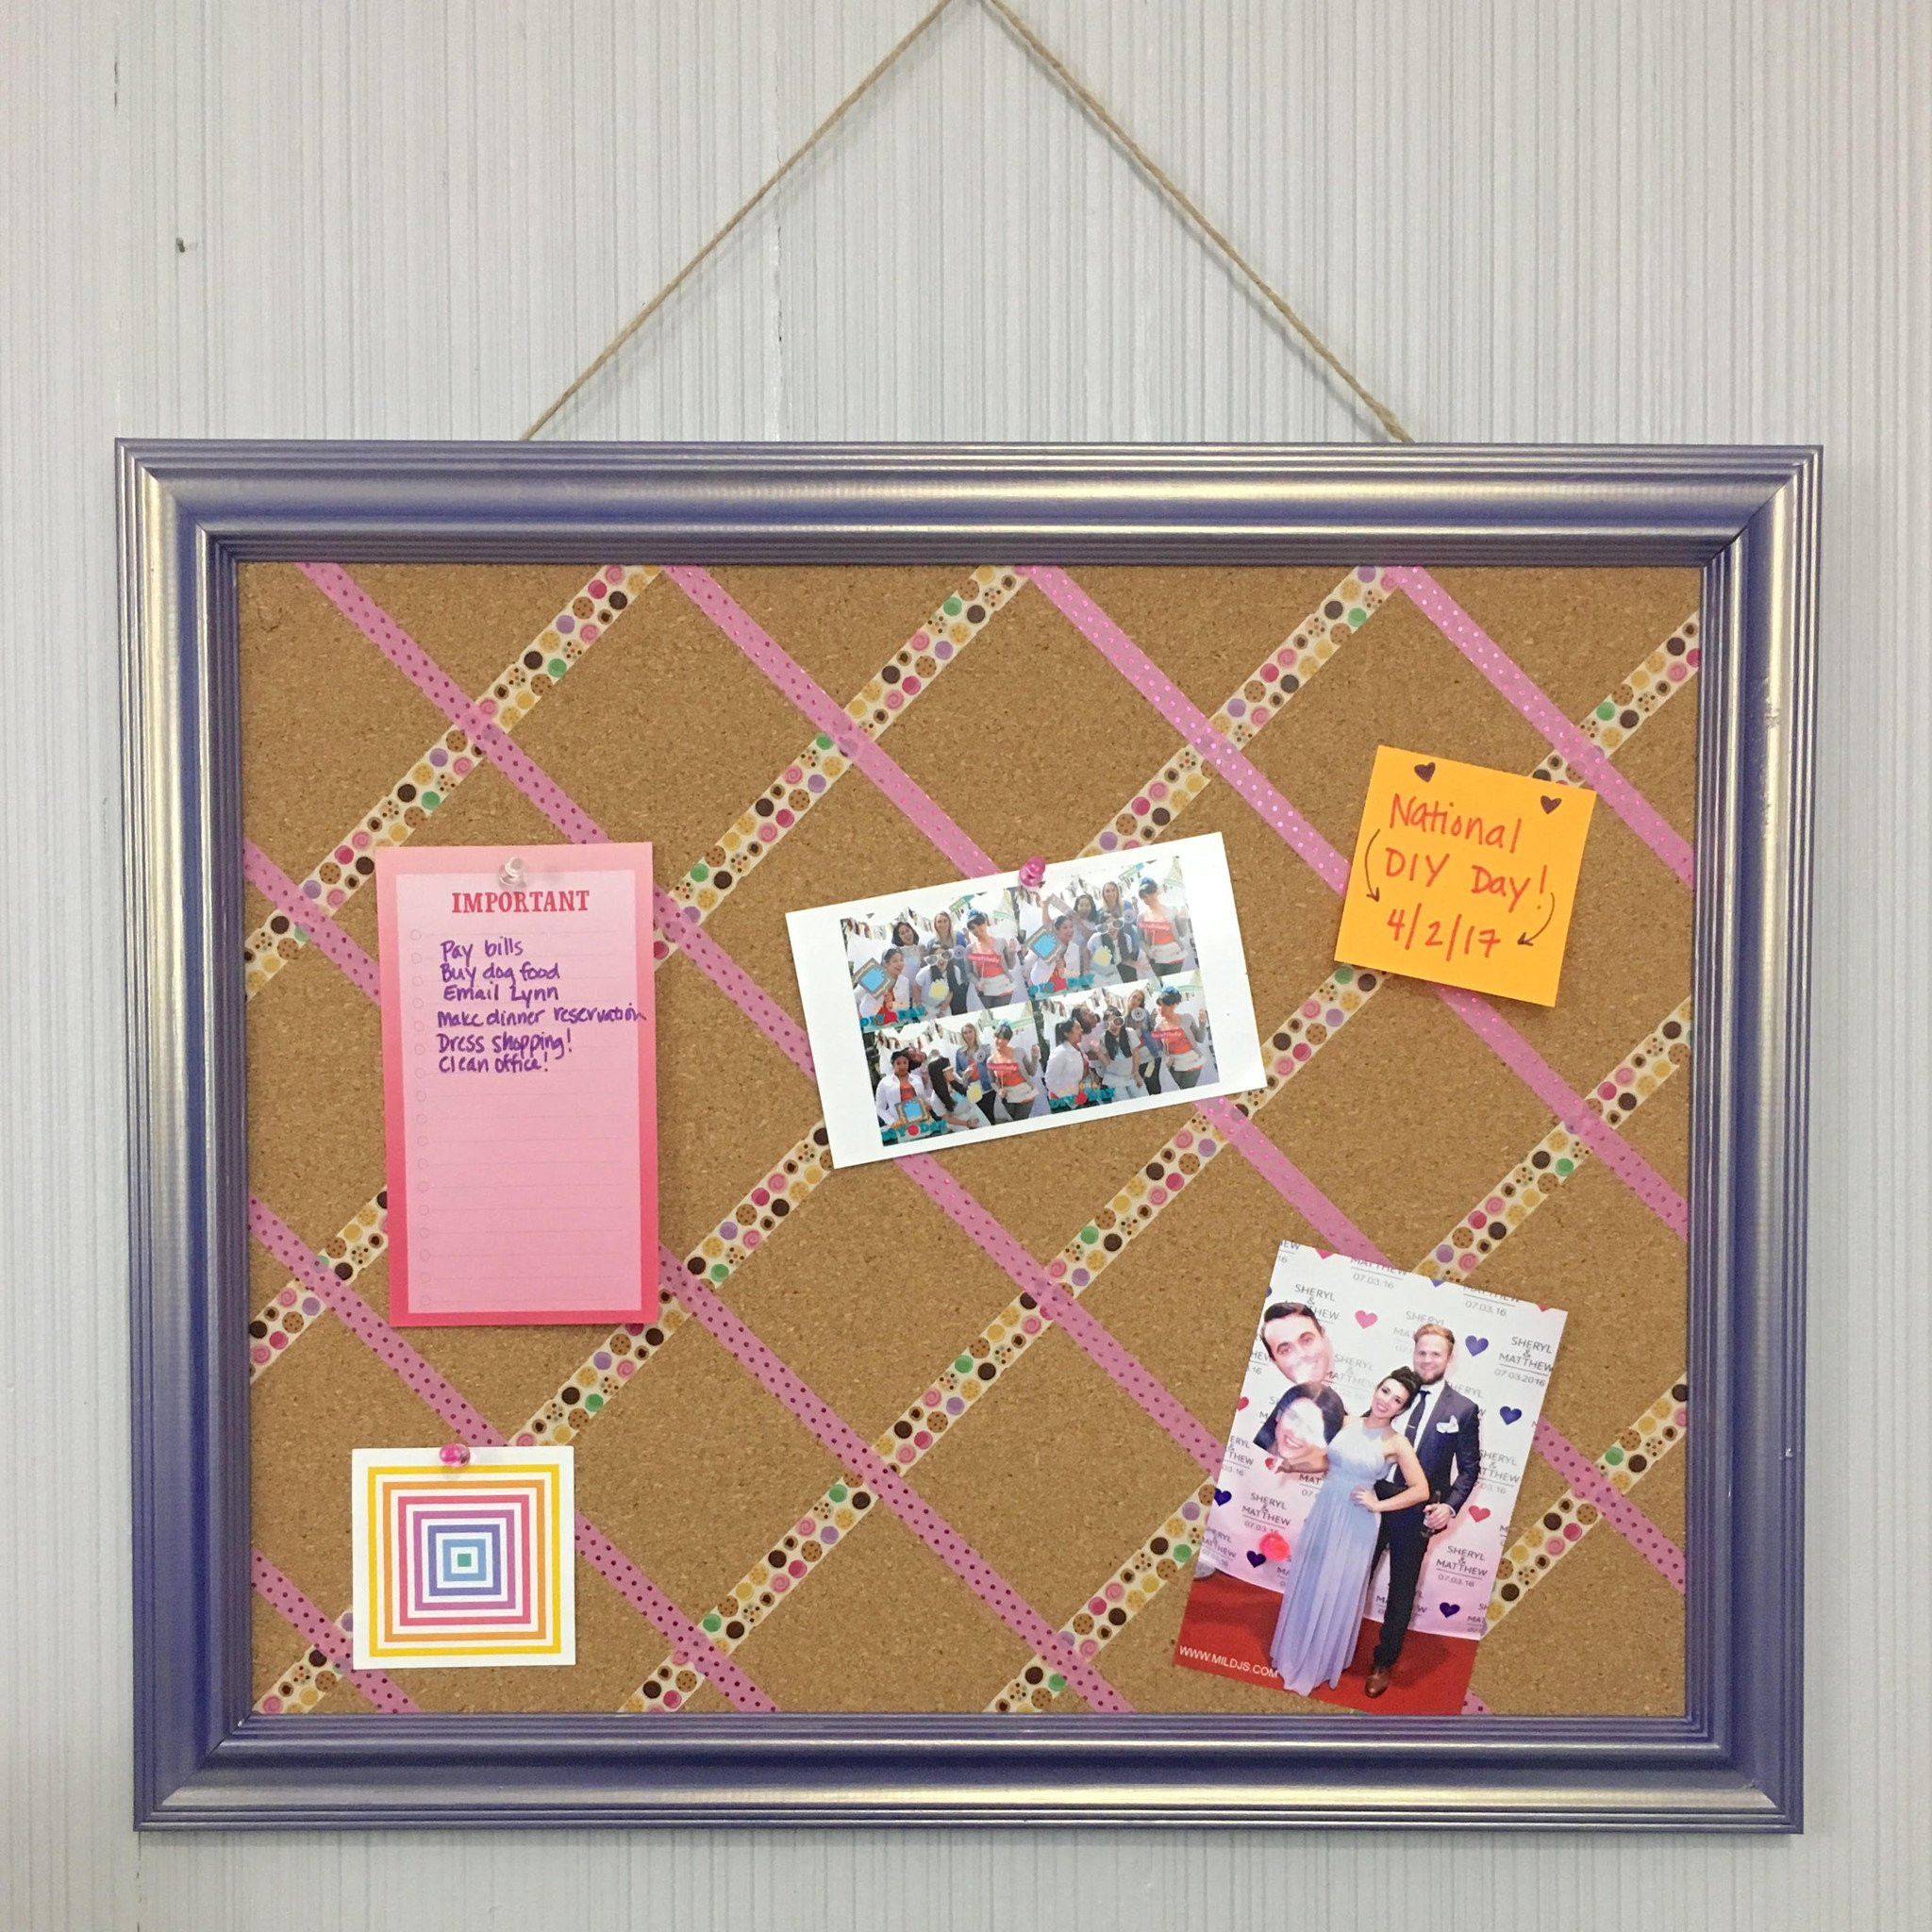 Best ideas about DIY Bulletin Board
. Save or Pin DIY Bulletin Board – Craft Box Girls Now.